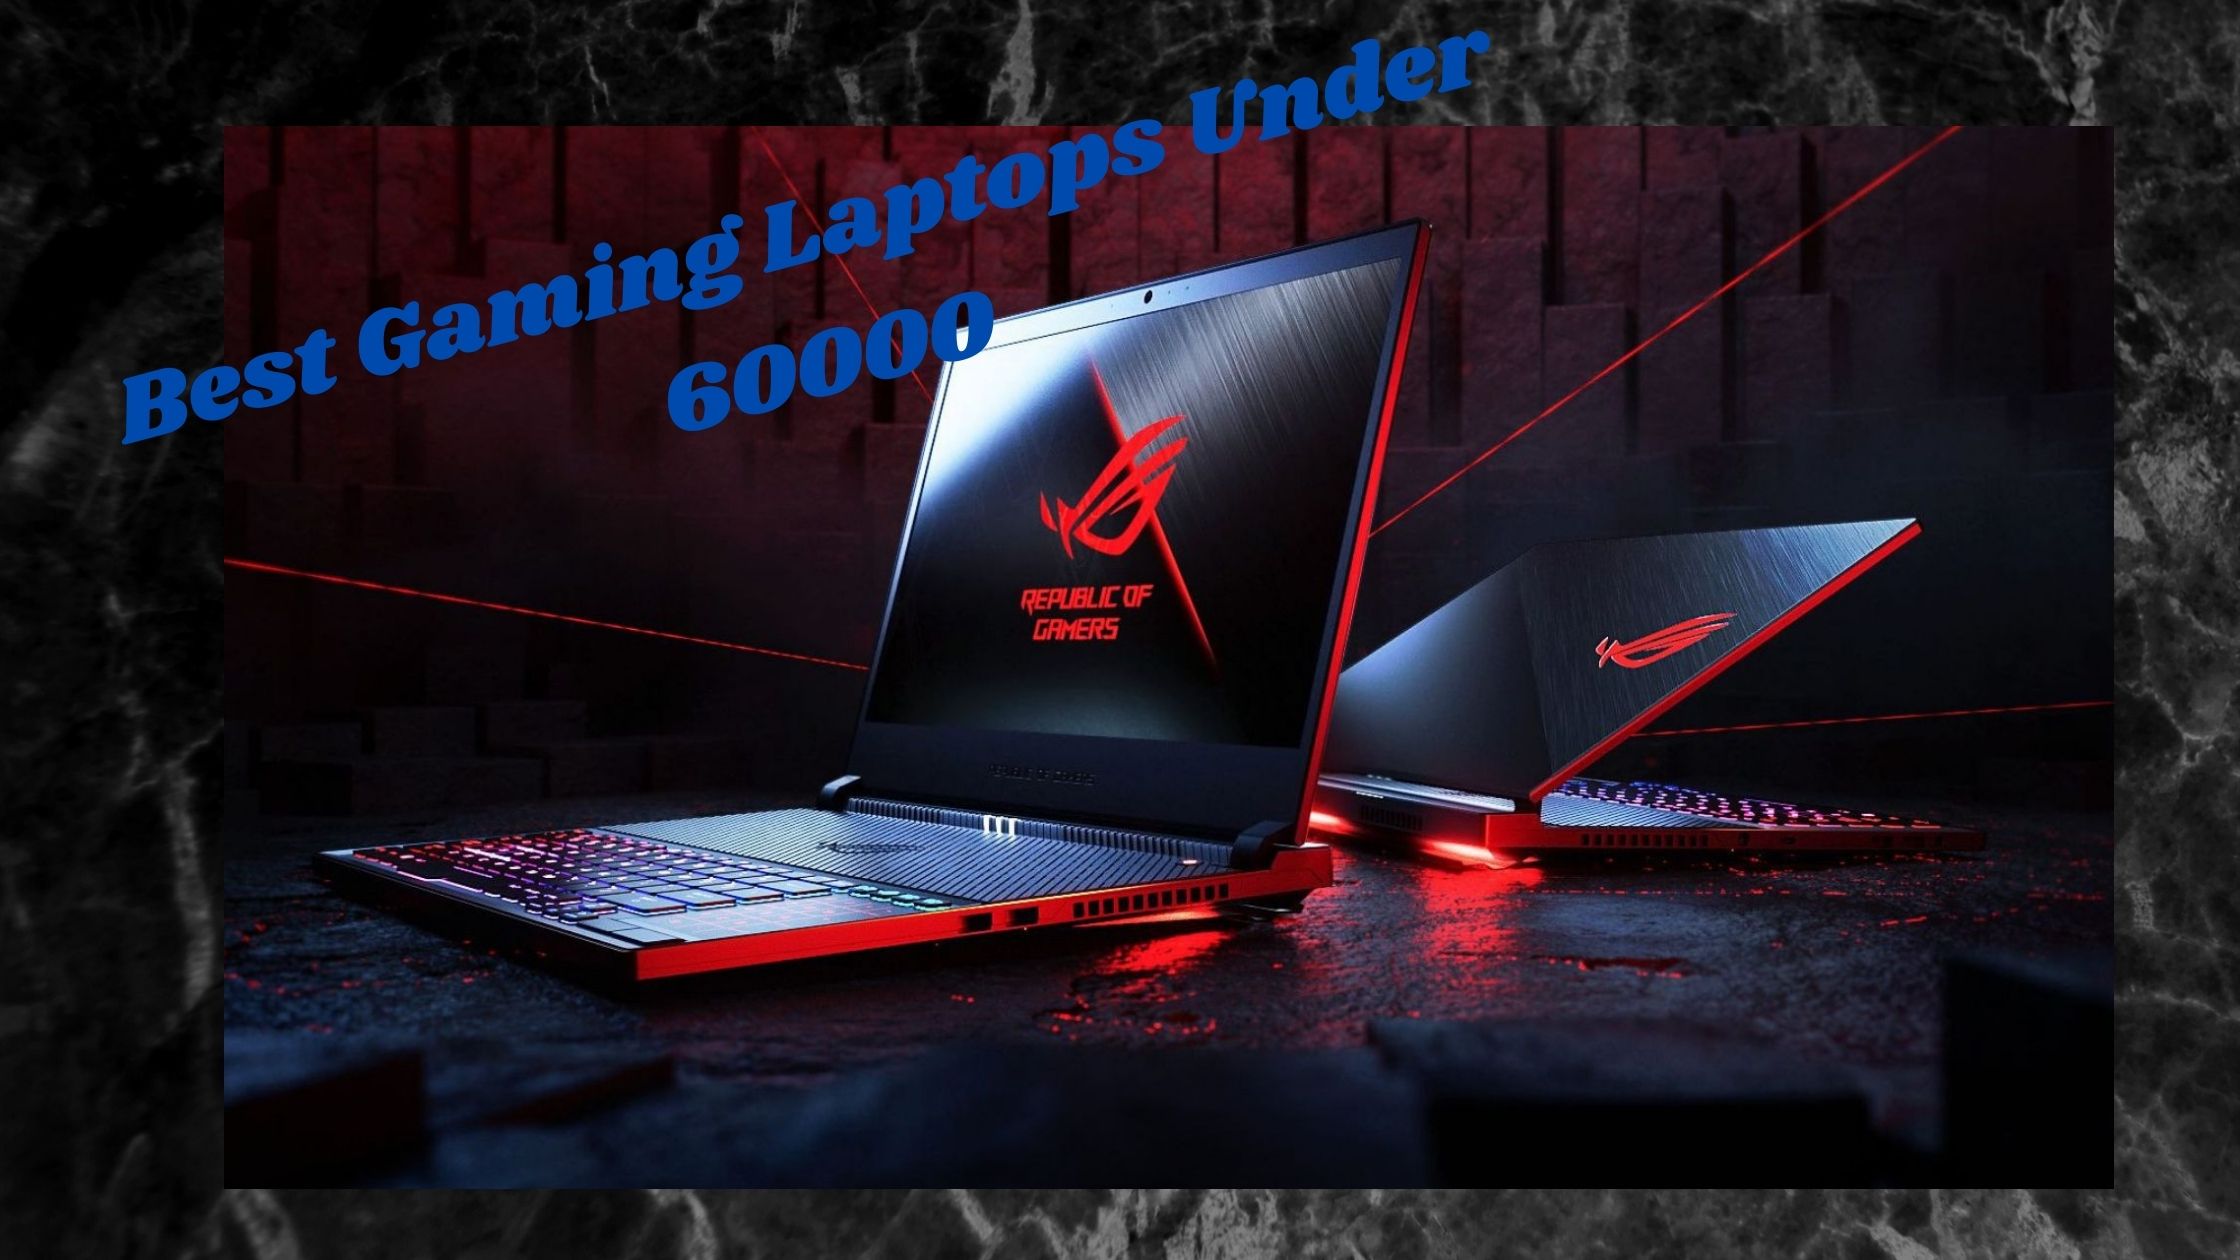 Best Gaming Laptops Under 60000 India 2020